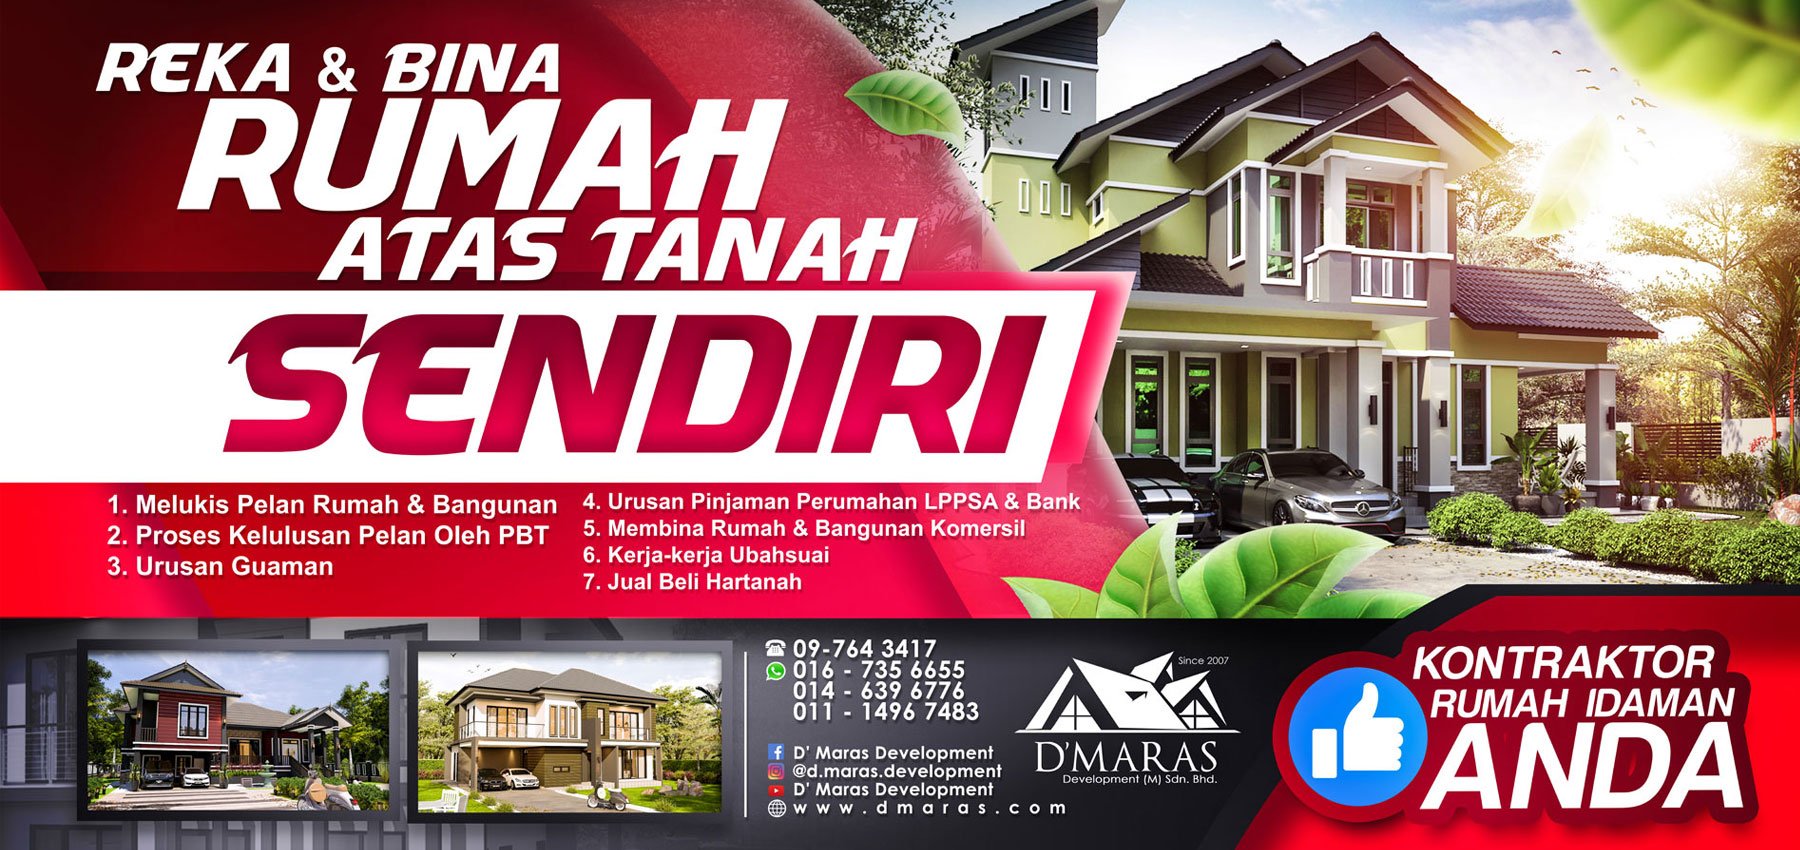 D Maras Development Kontraktor Bina Rumah Kelantan Terengganu